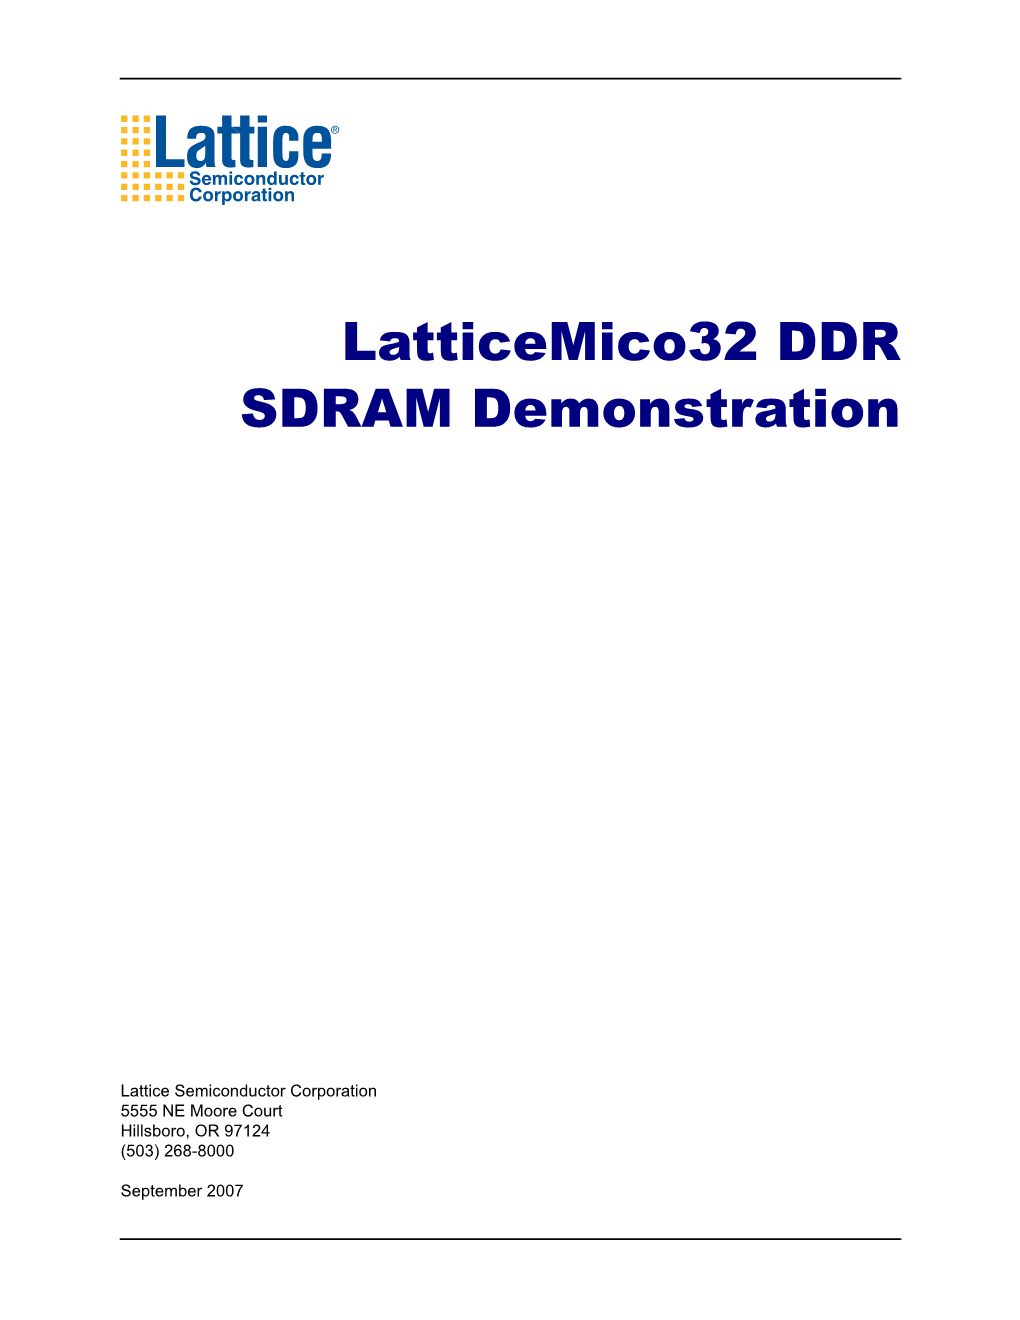 Latticemico32 DDR SDRAM Demonstration